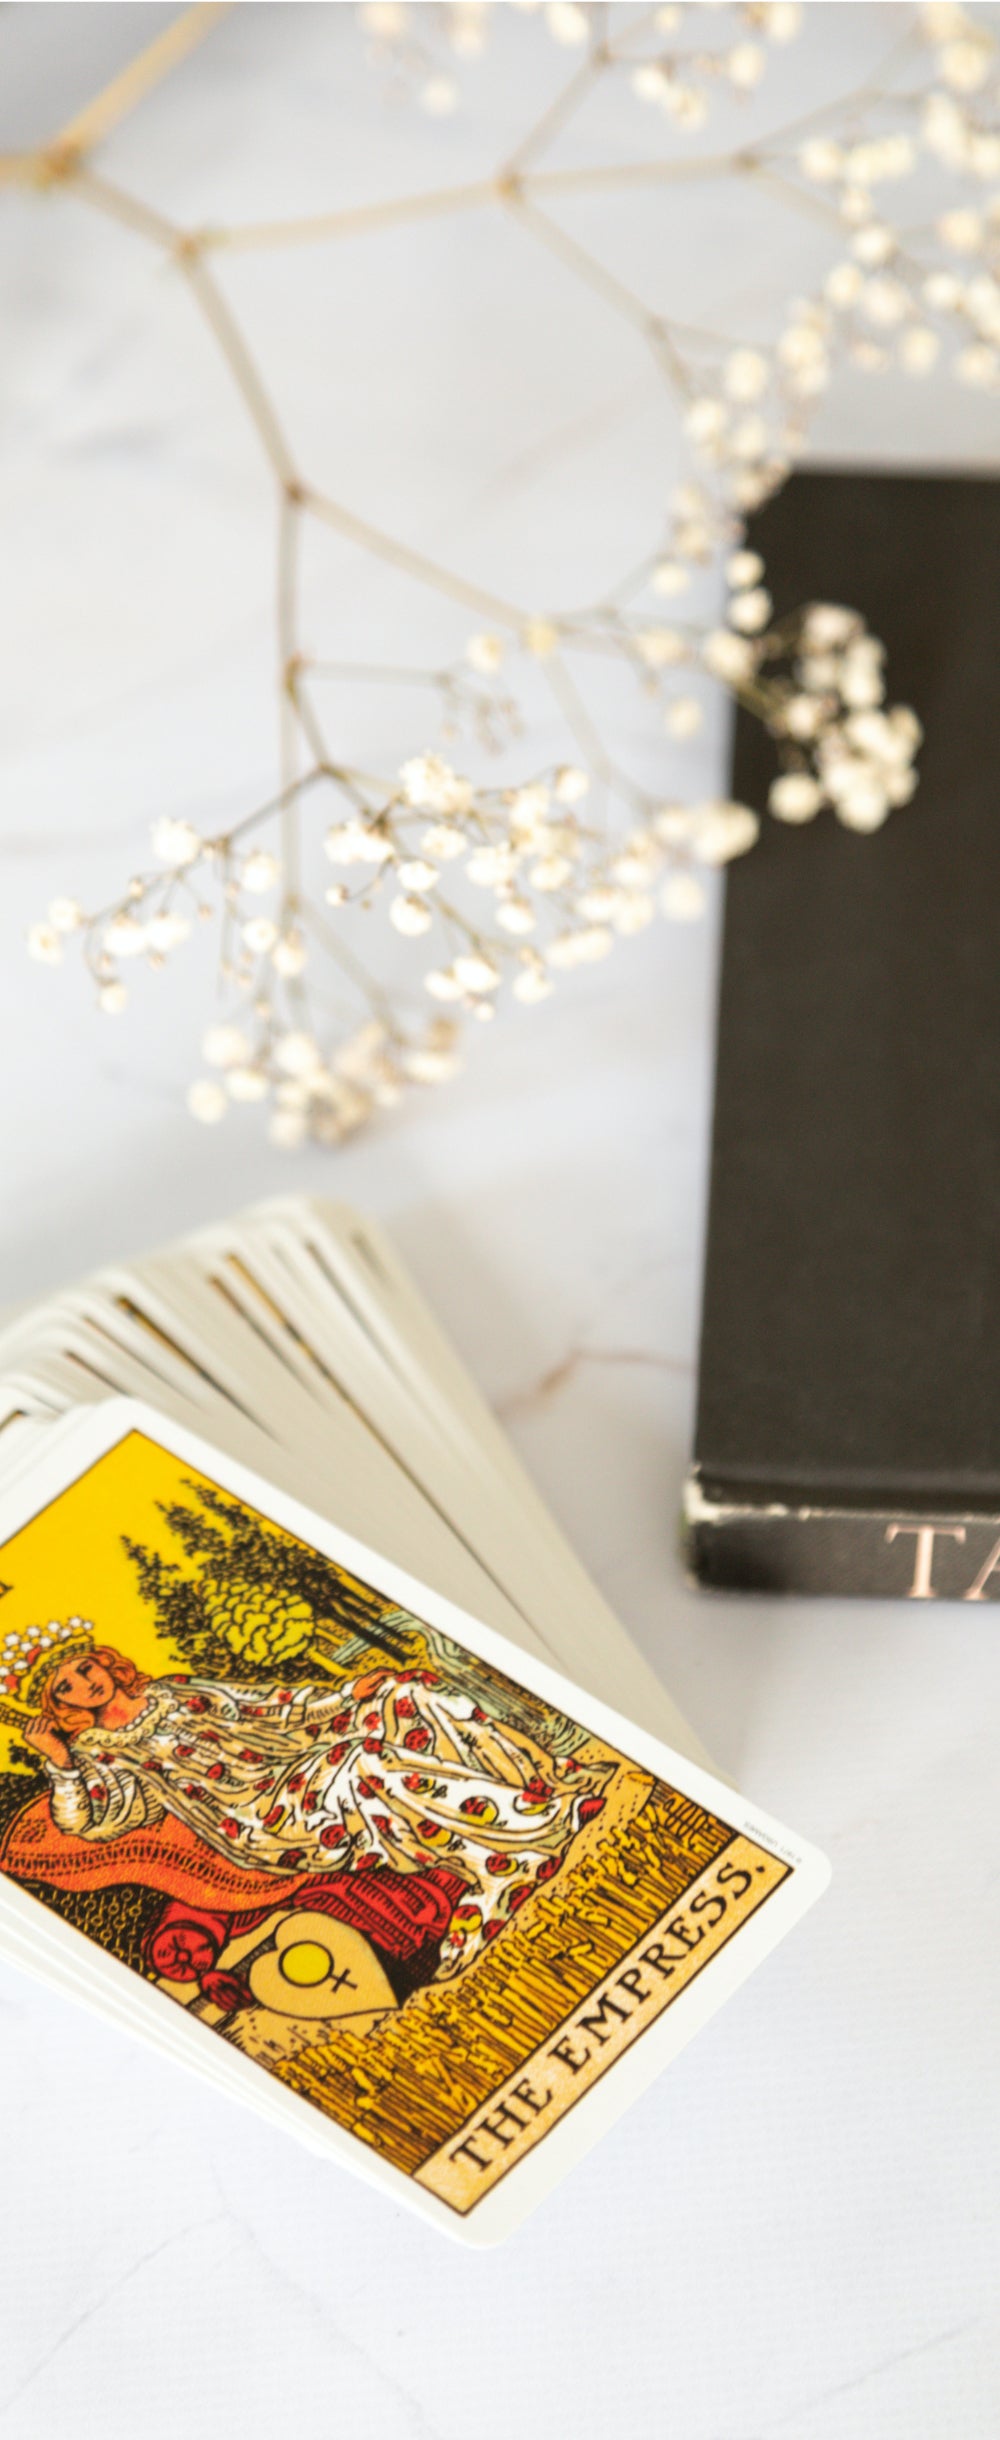 Tarotdeck, tarot, tarotboek, the empress card op witte ondergrond, de keizerin